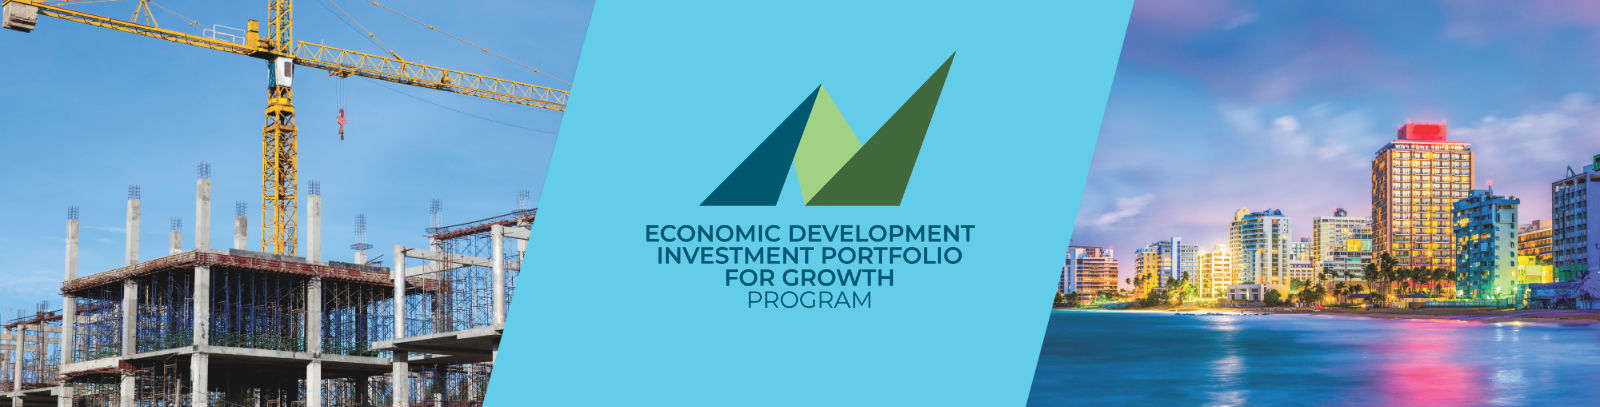 Investment Portfolio for Growth (IPG) Program